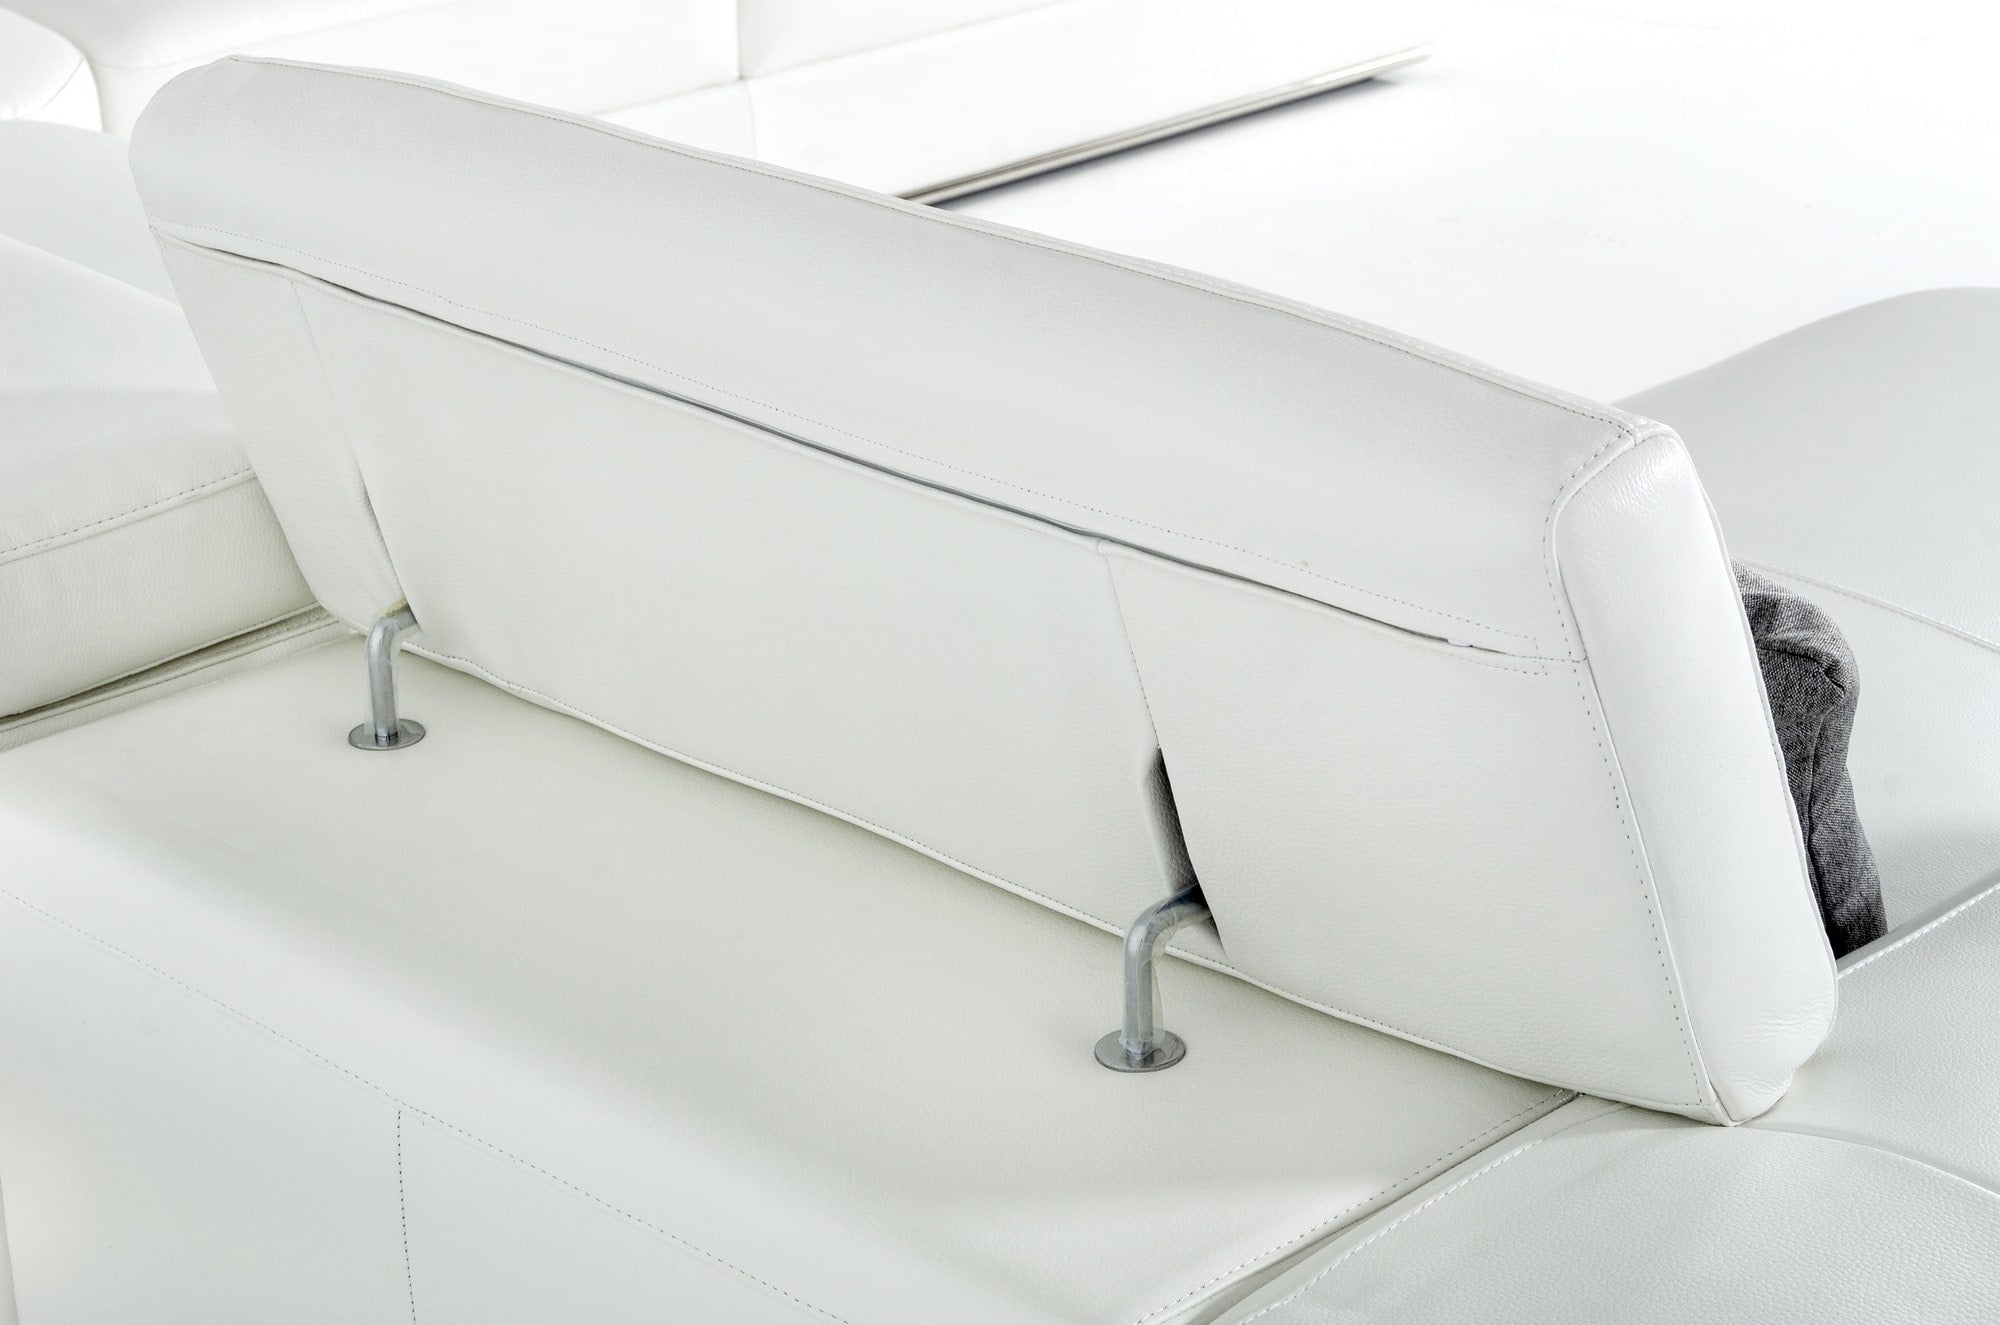 Divani Casa Pella - Modern White Italian Leather U Shaped Sectional Sofa-Sectional Sofa-VIG-Wall2Wall Furnishings